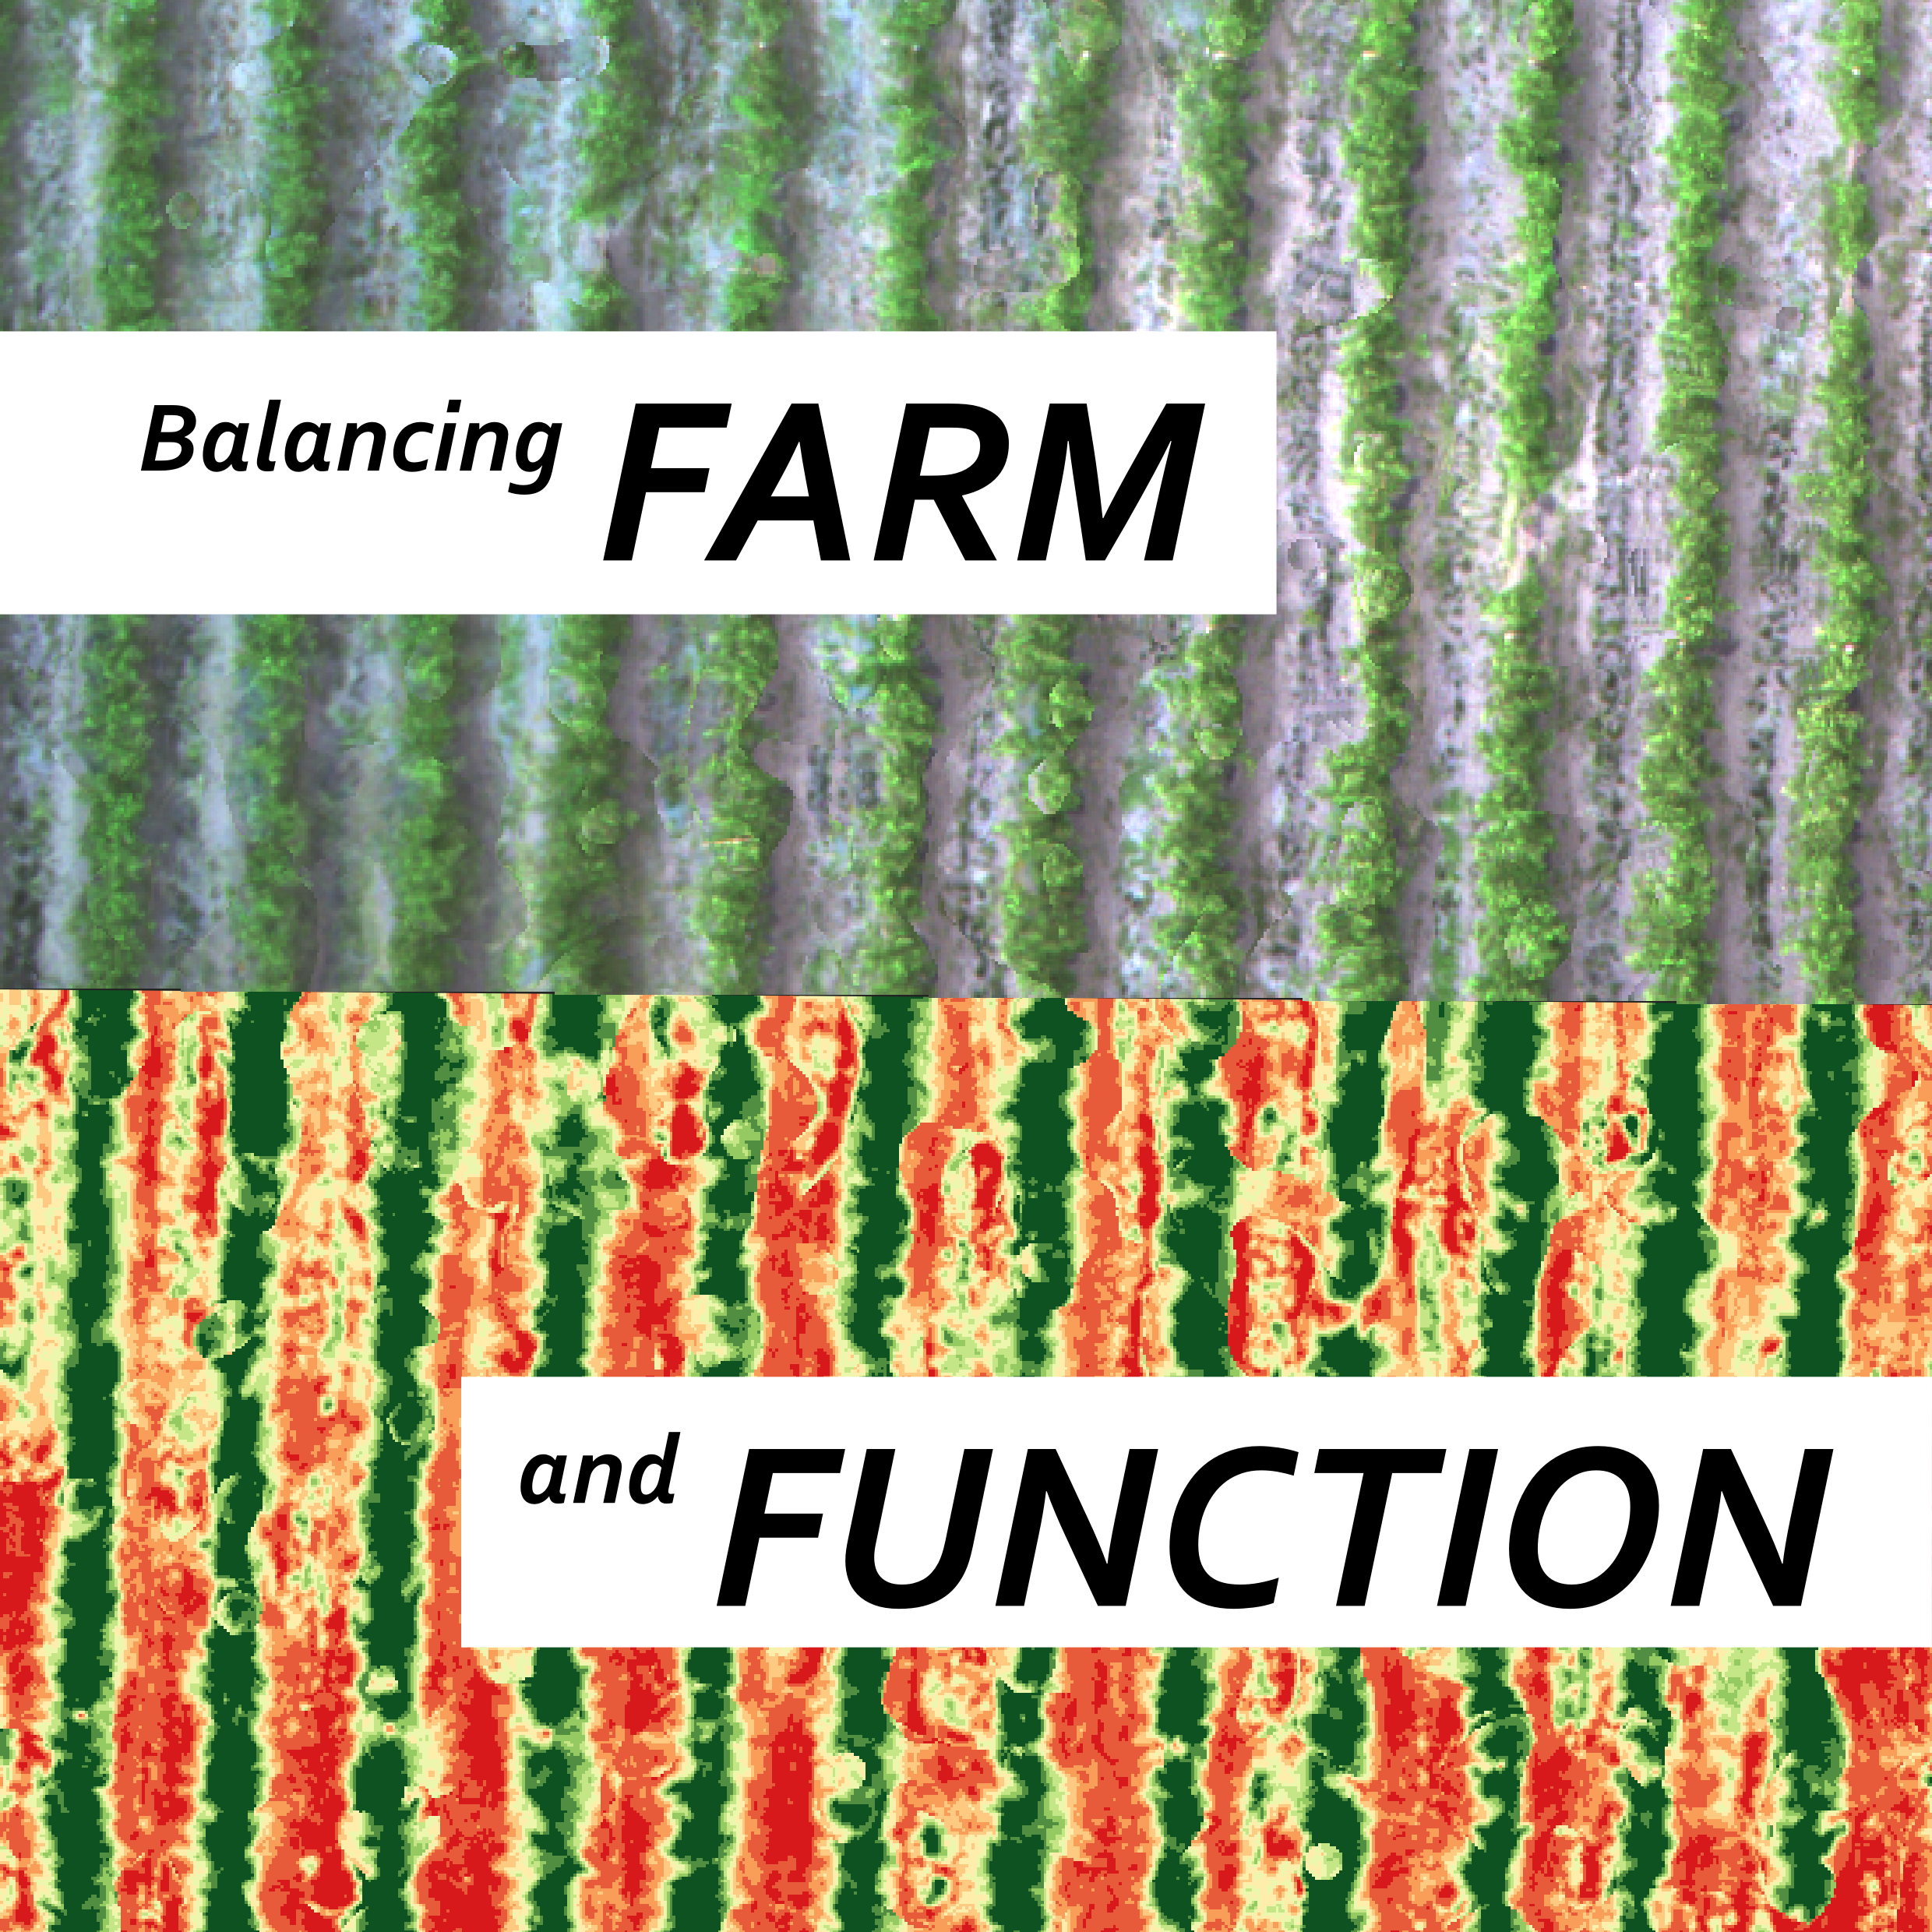 Balancing Farm and Function